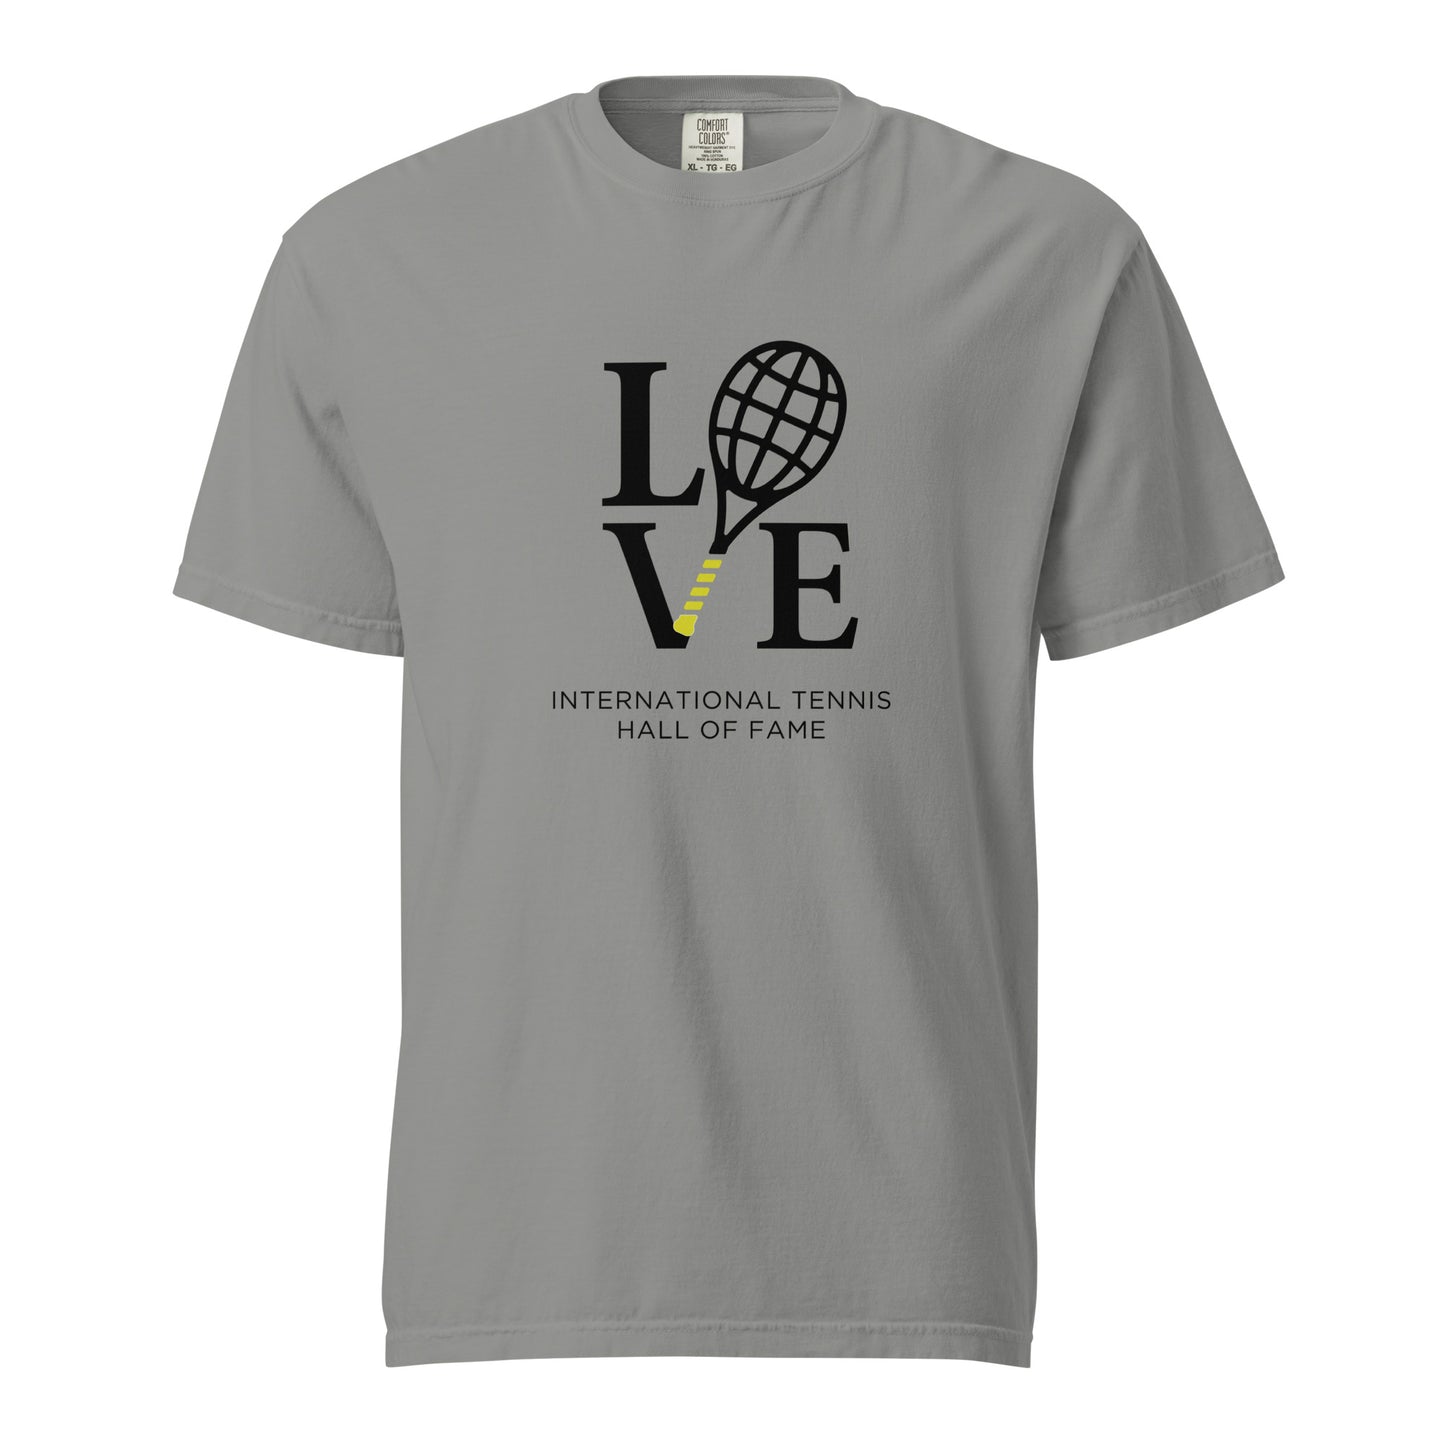 Camiseta ITHF Love